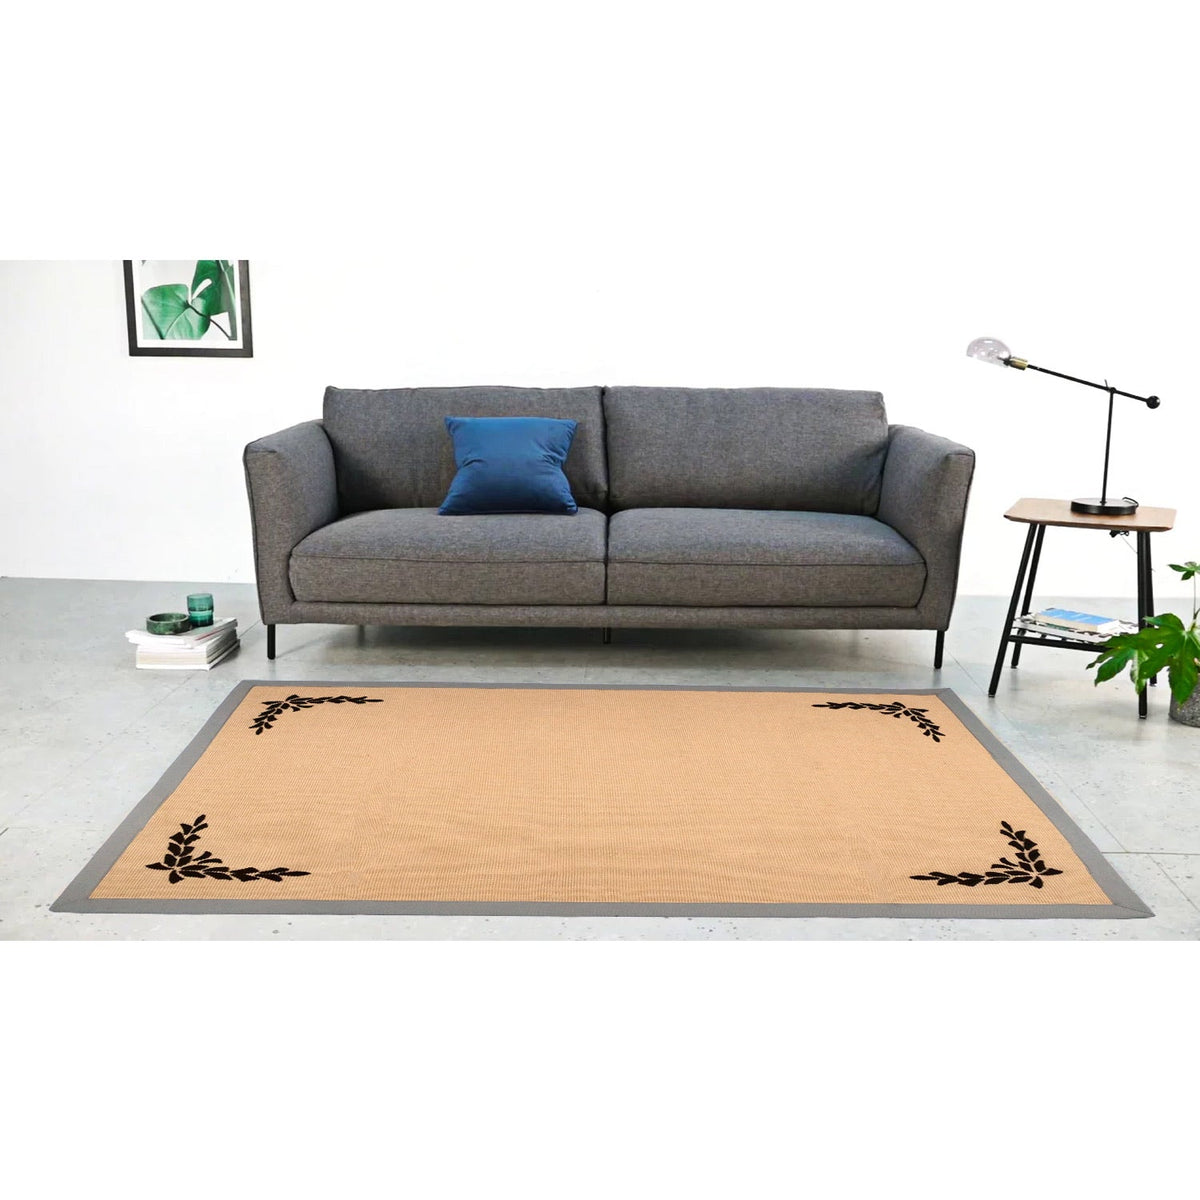 Natural Jute Carpet with Flocked Border Design- 120cm x 180cm - Luxury Rug, Organic Carpet, BedSide Runner